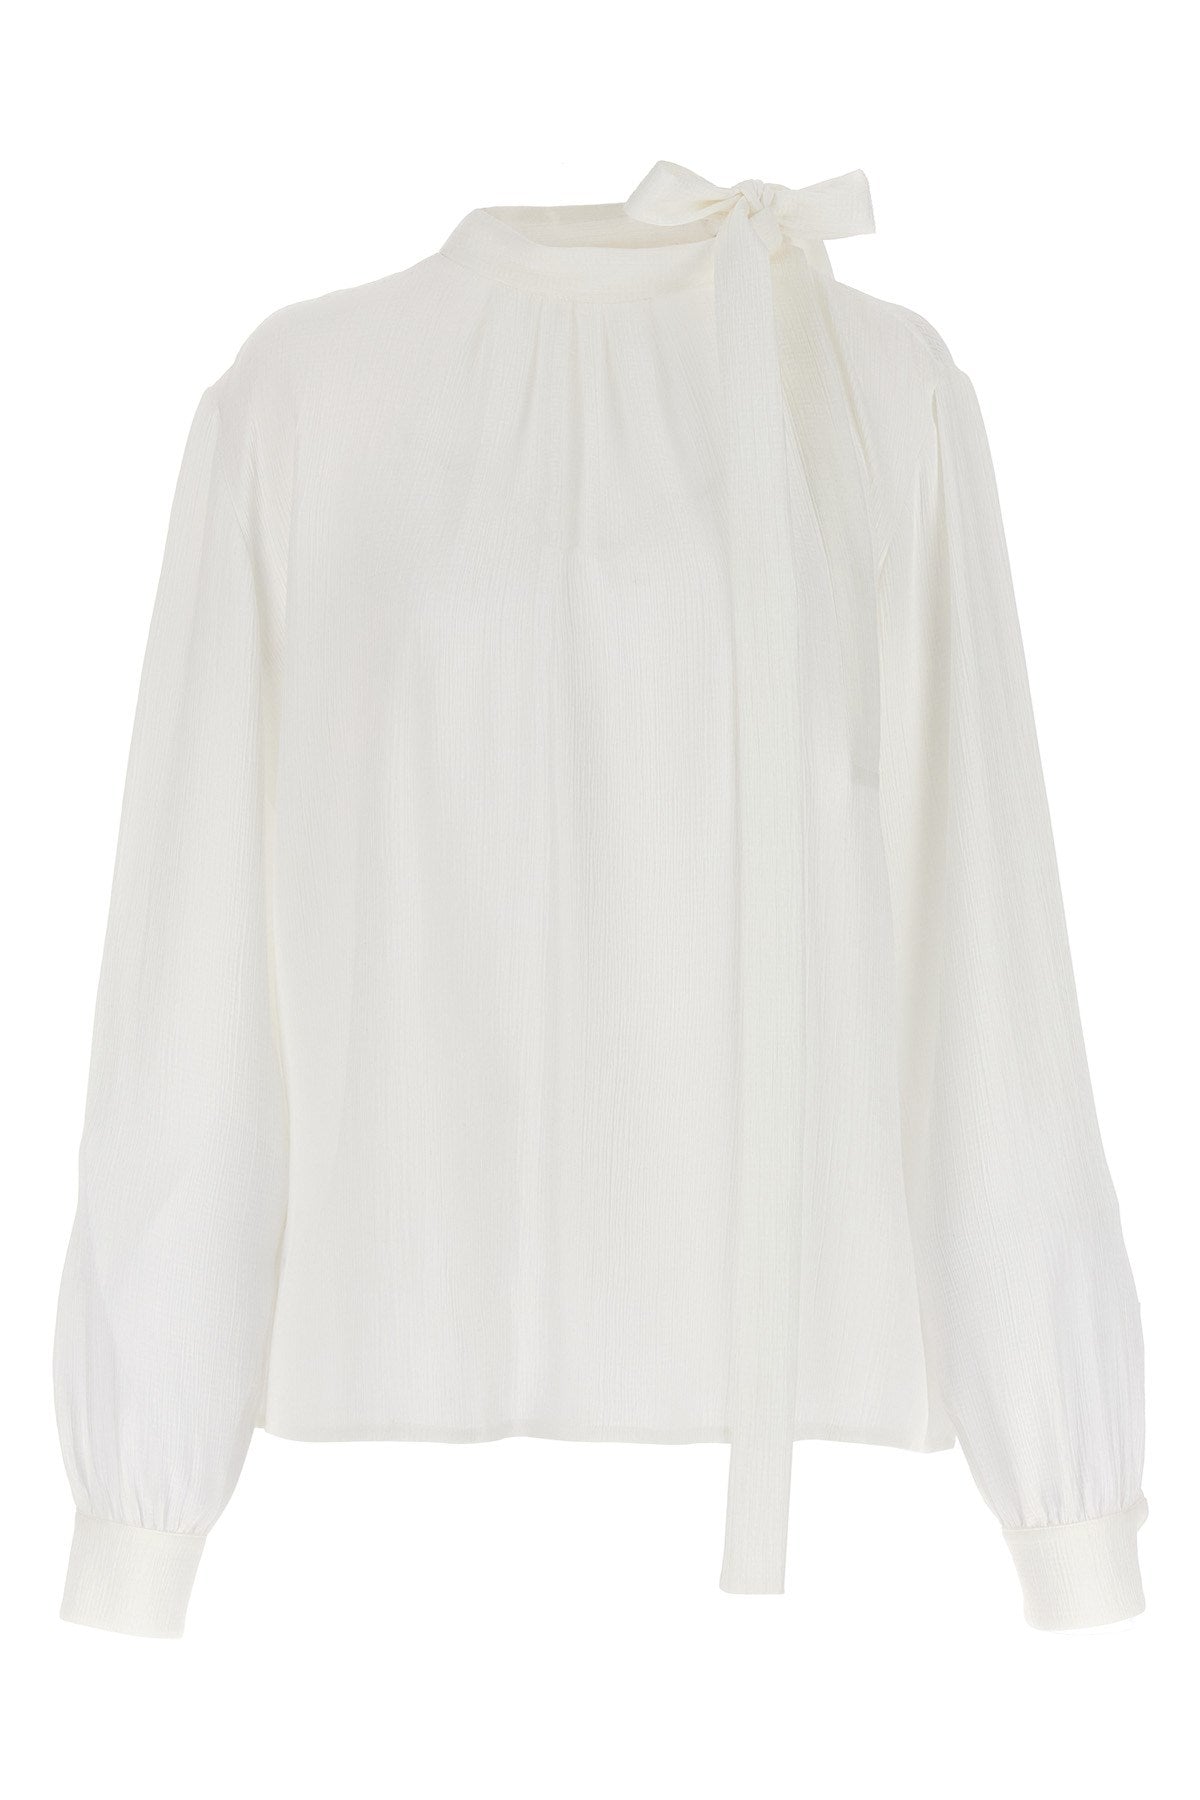 Givenchy Women Jacquard Logo Shirt In White